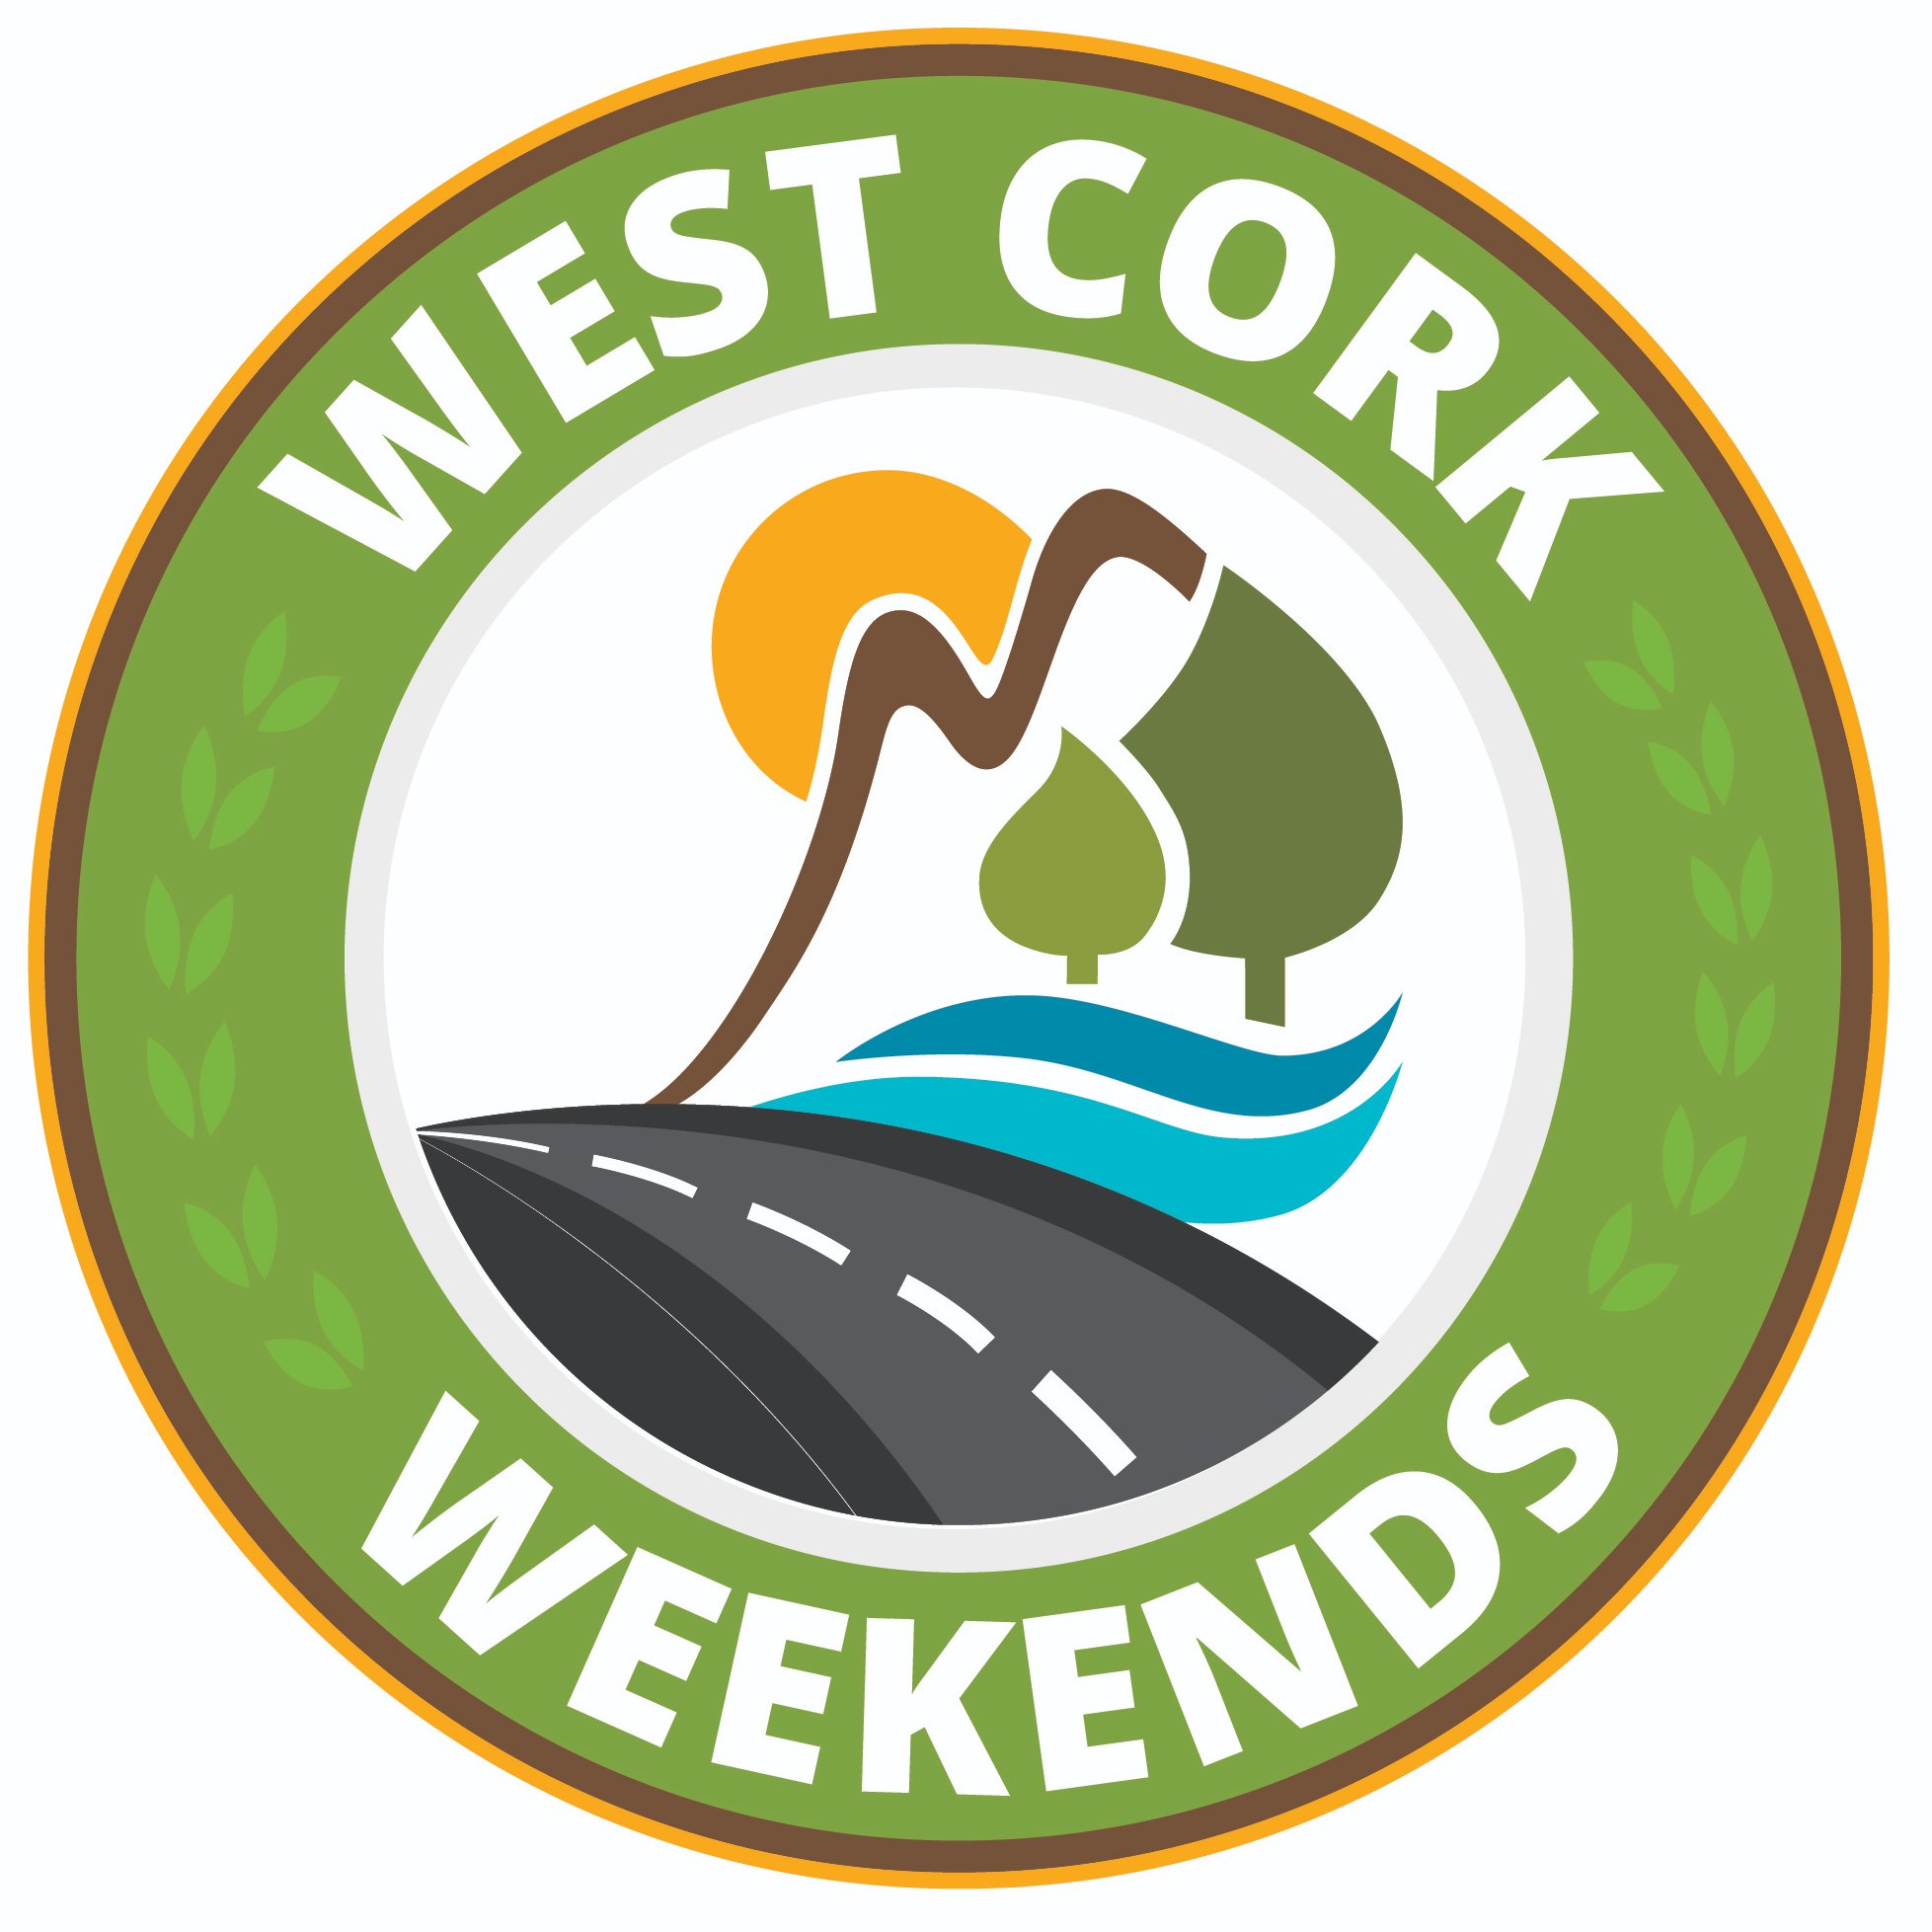 West Cork Weekends